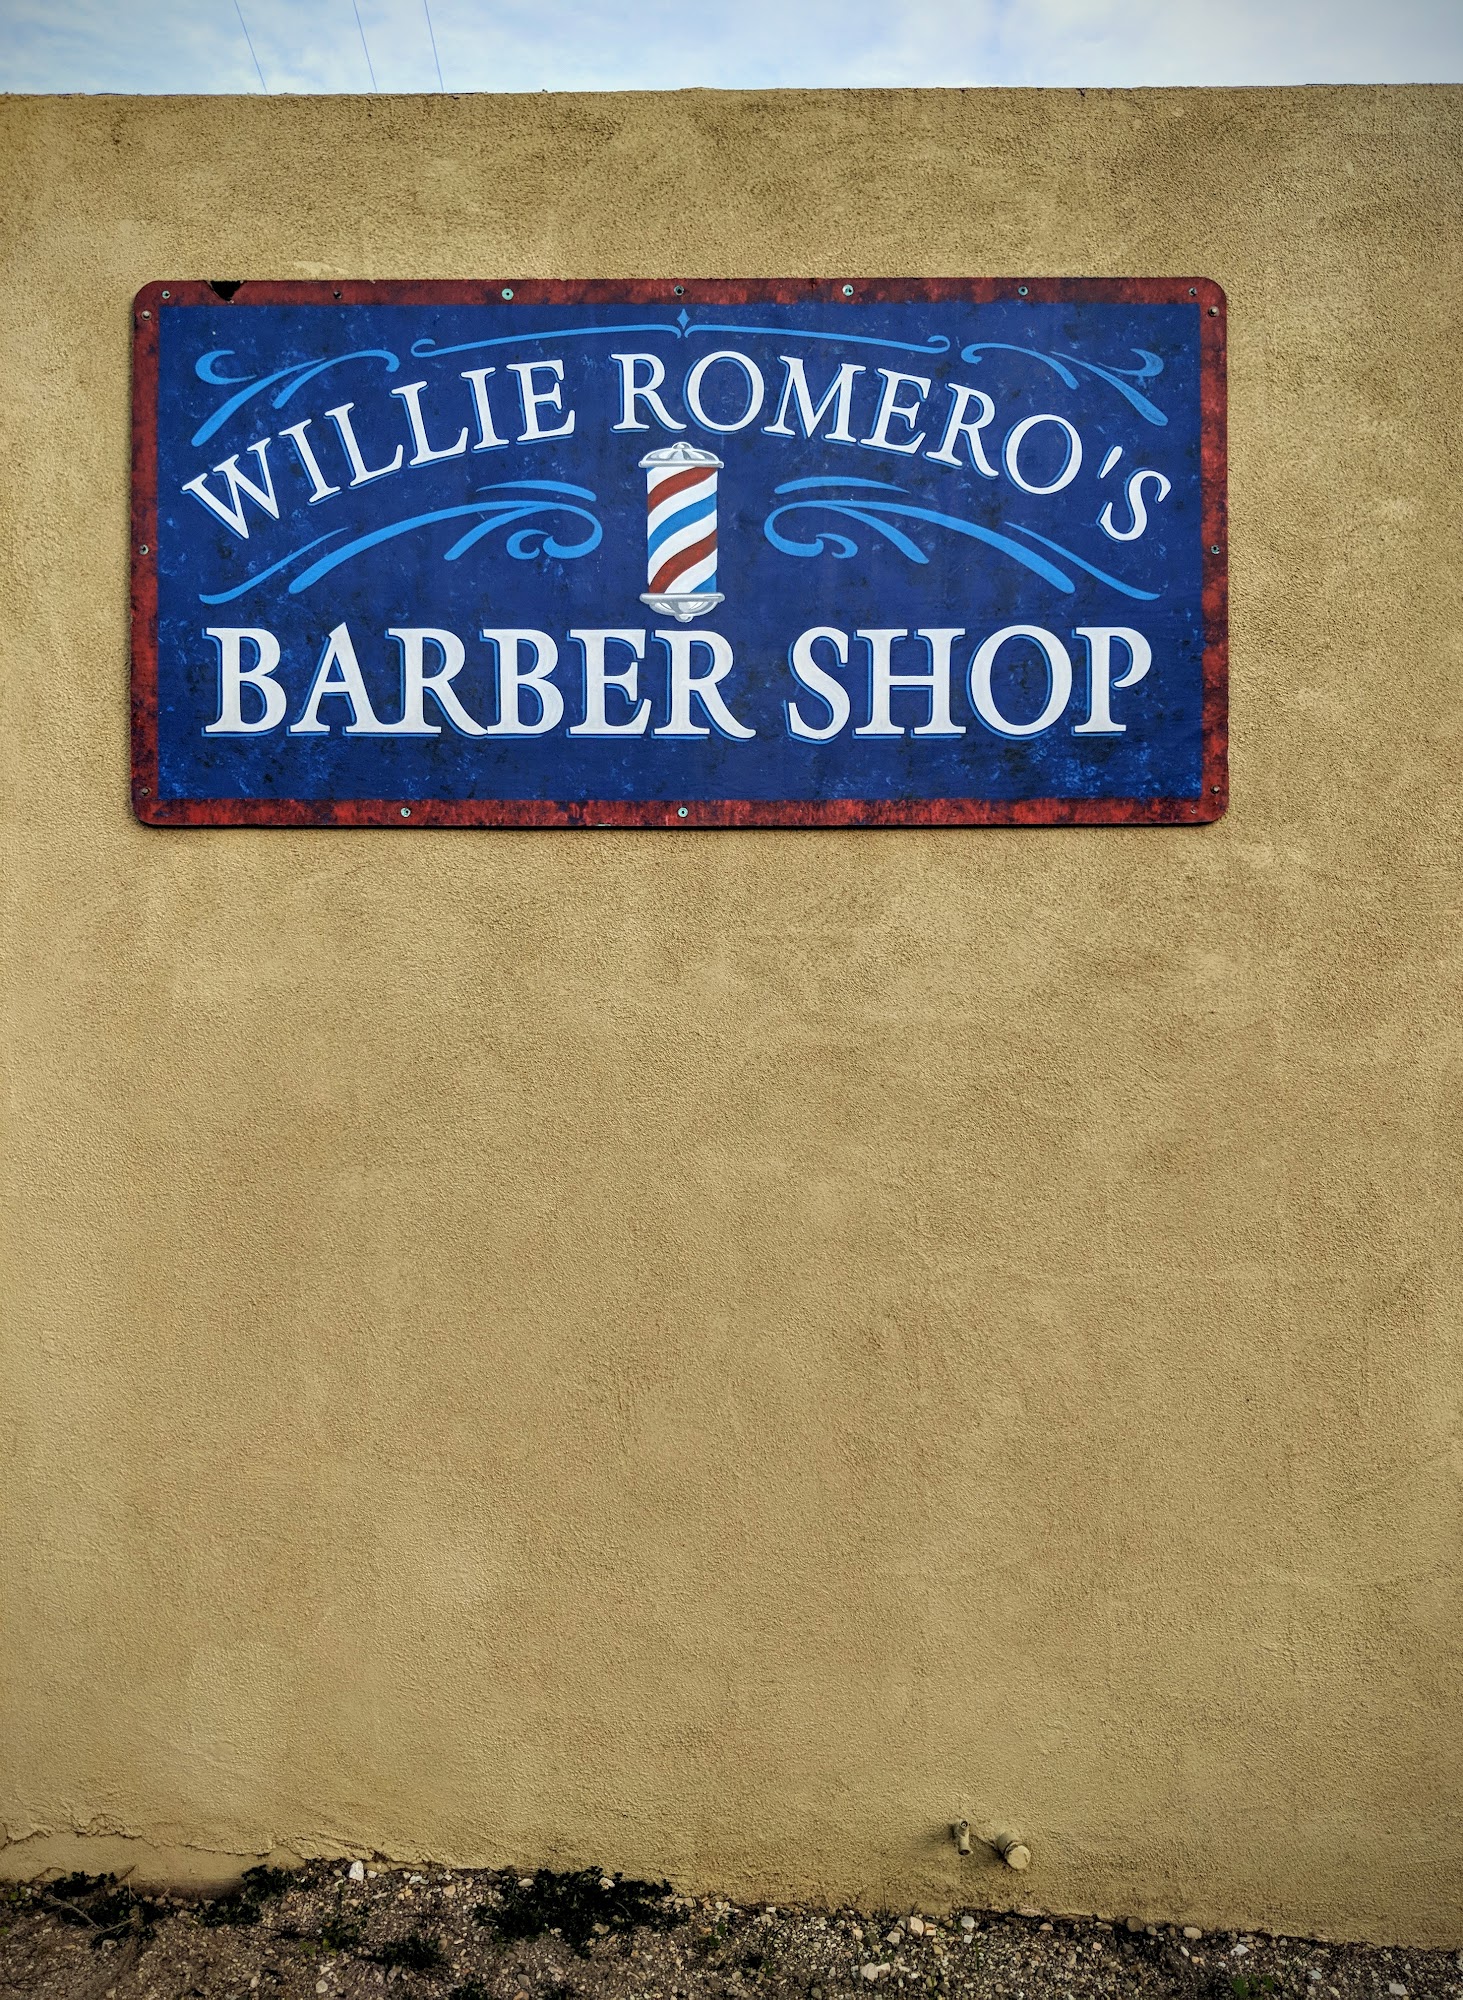 Willie Romero's Barber Shop